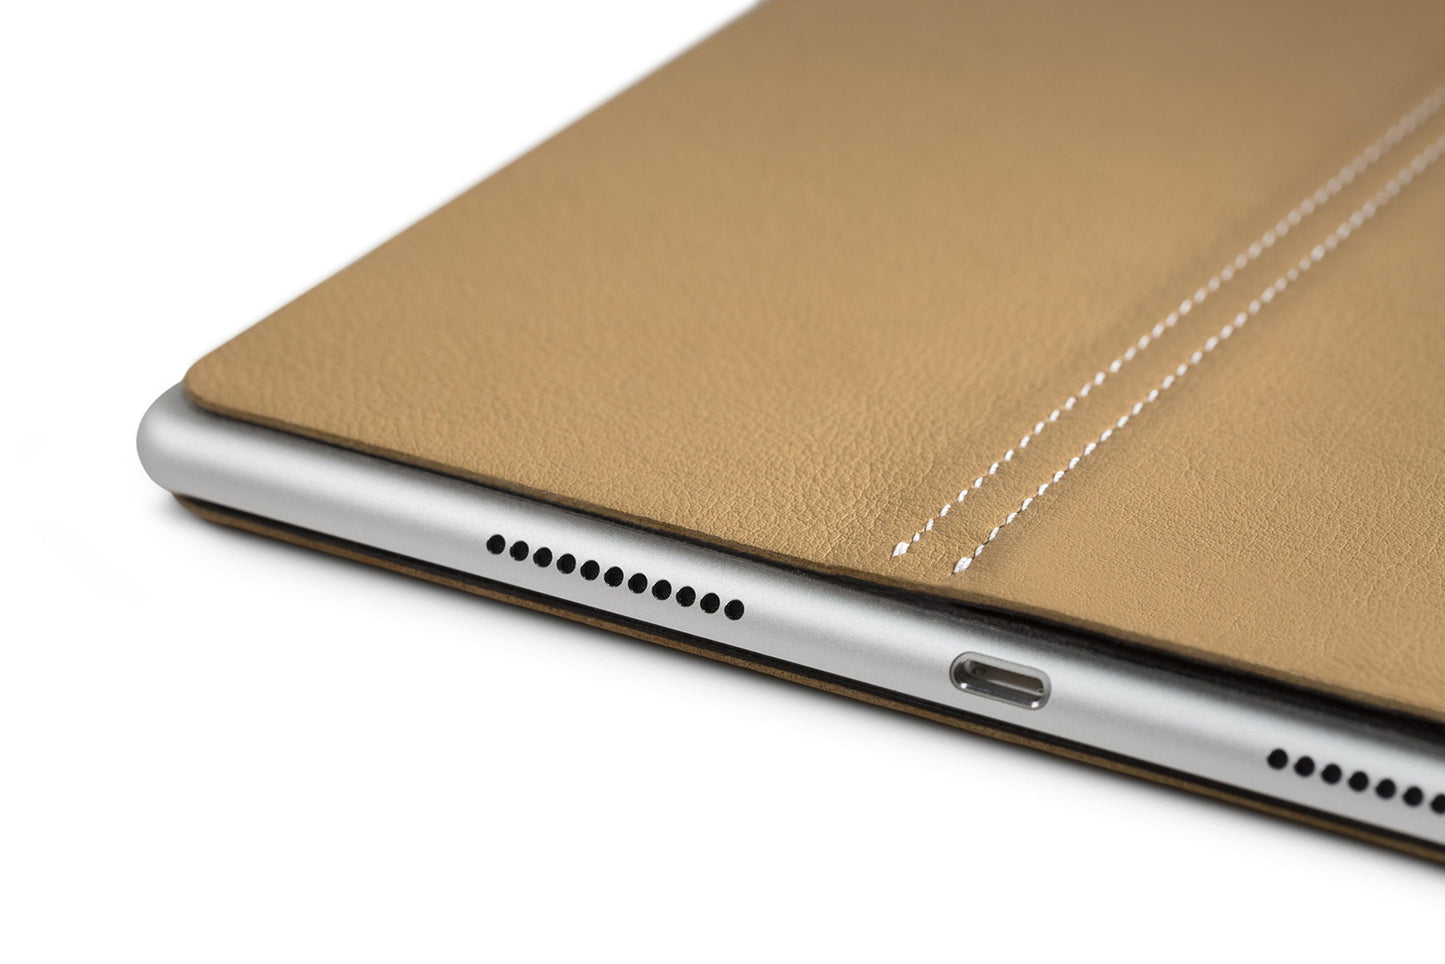 Twelve South SurfacePad for iPad Pro 12.9" (2017/2015), Camel